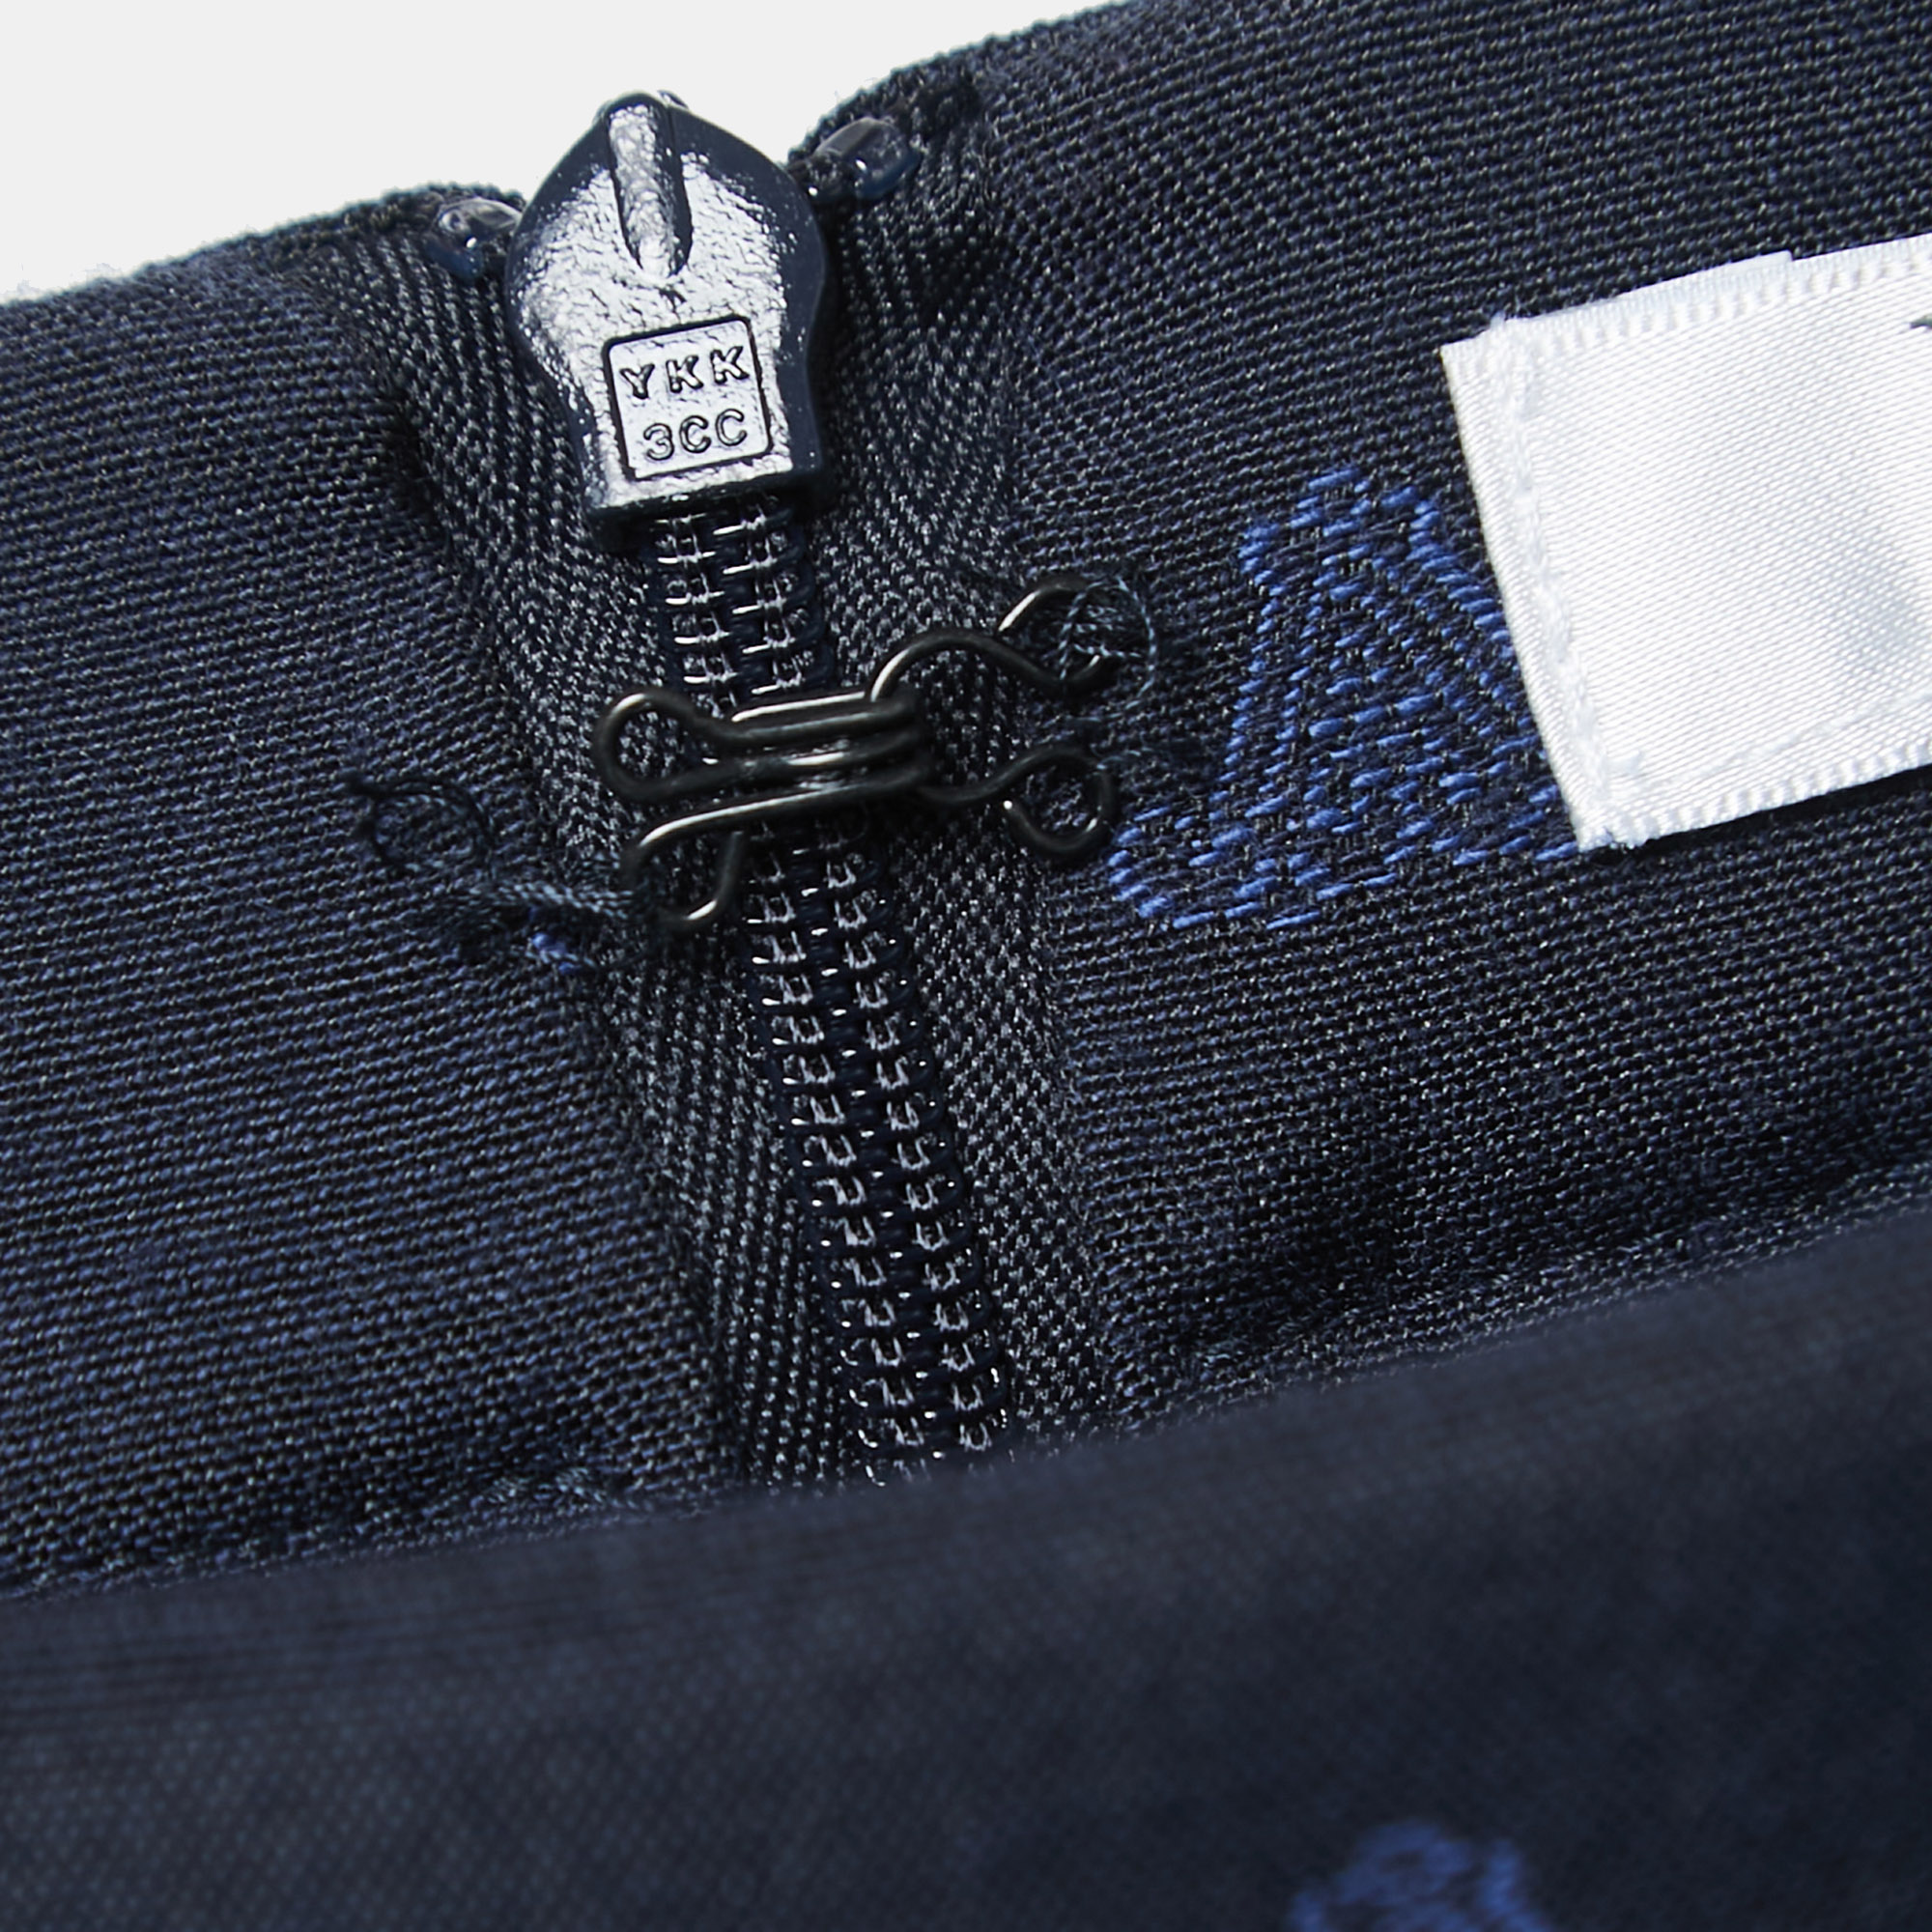 Max Mara Navy Blue Alphabets Patterned Cotton Blend Pencil Skirt XS